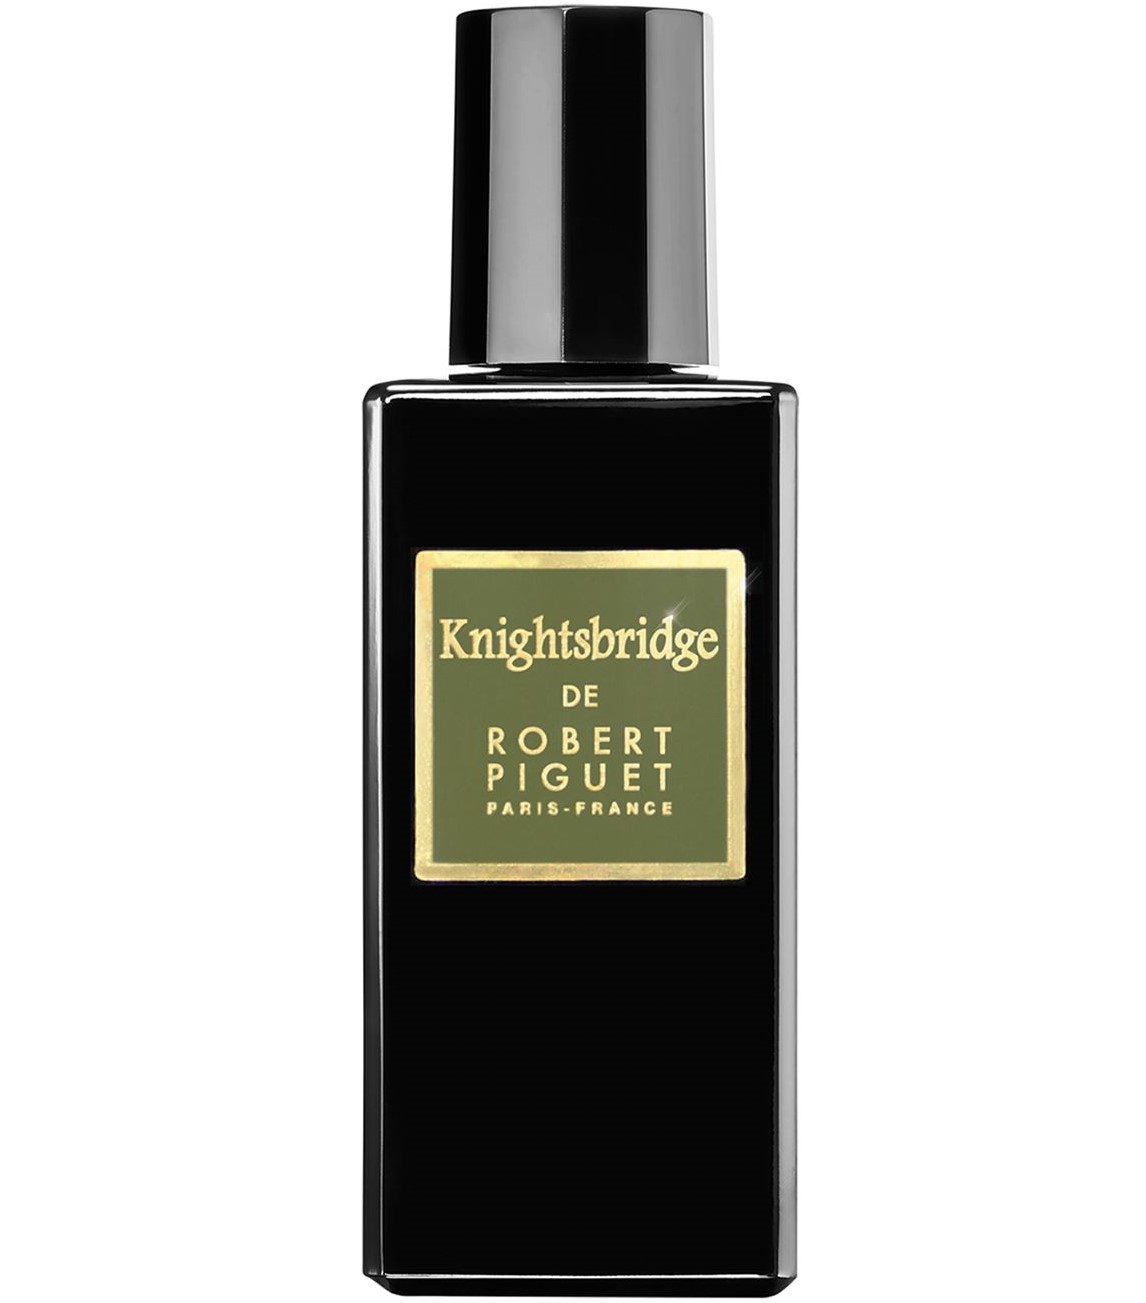 Knightsbridge (Eau de Parfum)